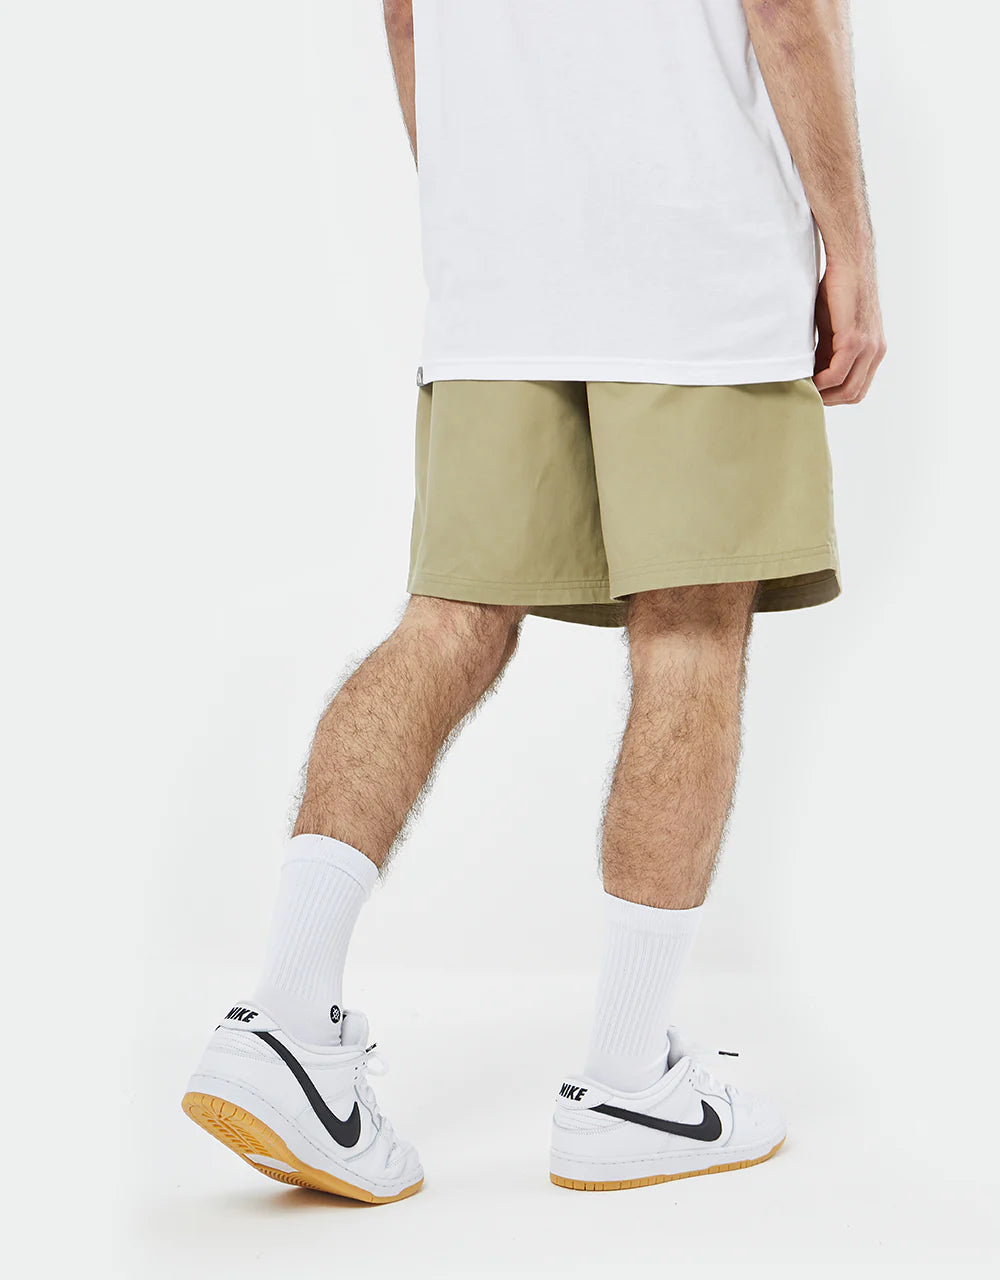 Nike SB Skyring Short - Neutral Olive/White - Sun Diego Boardshop